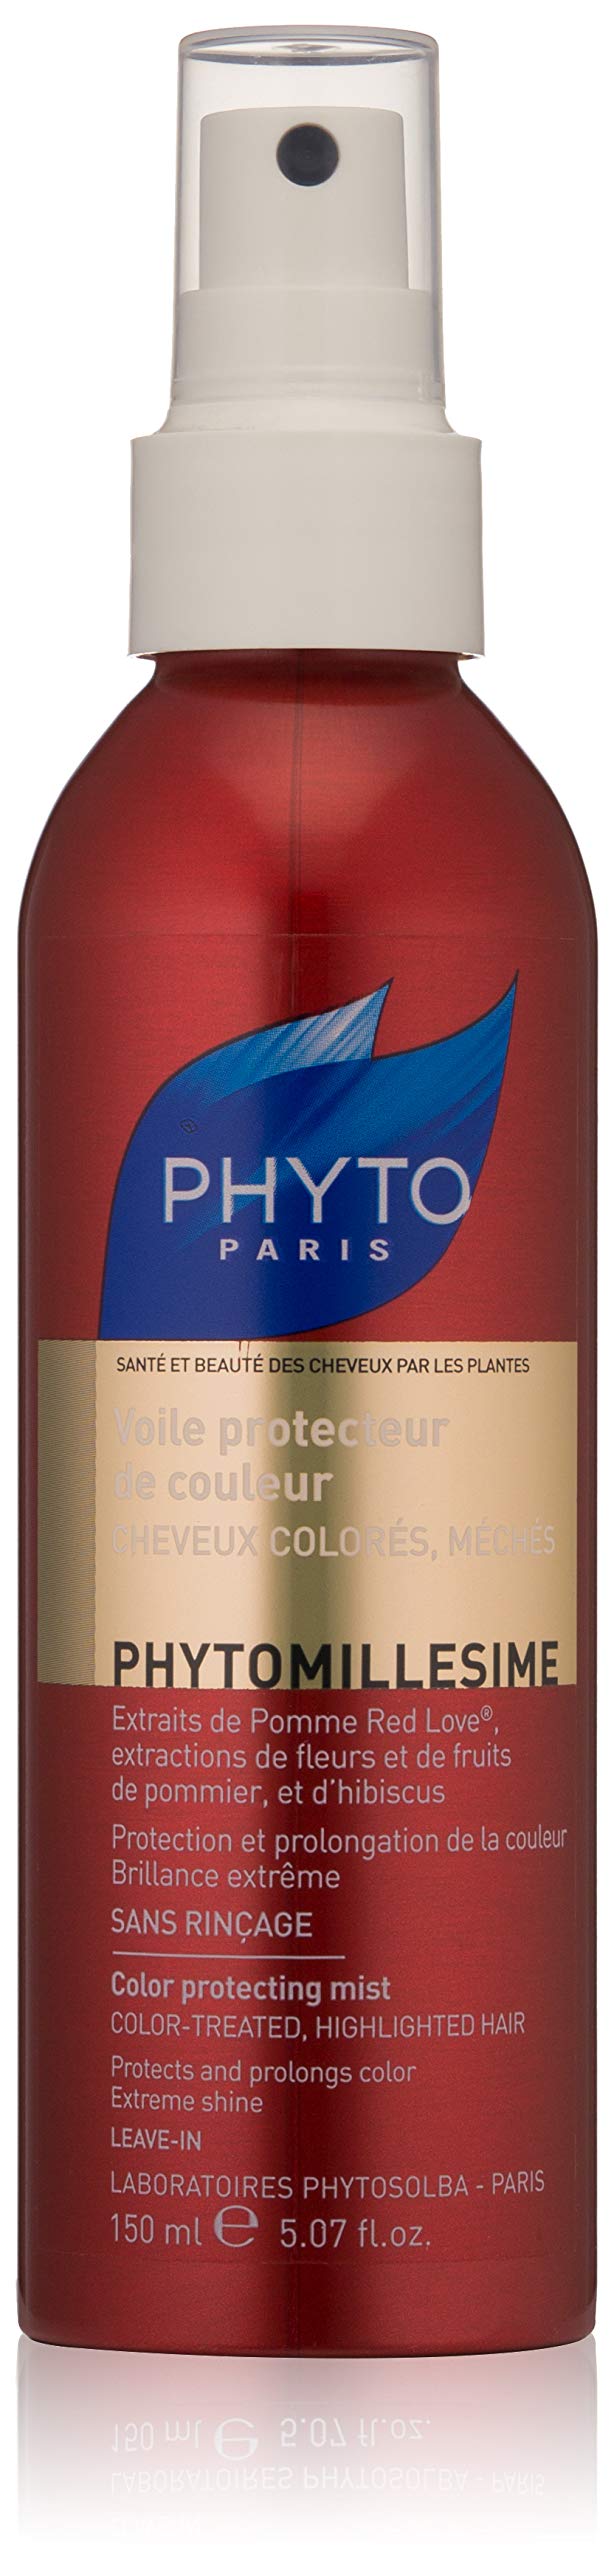 PHYTO Phytomillesime Botanical Color Protecting Mist, 5.07 Fl Oz